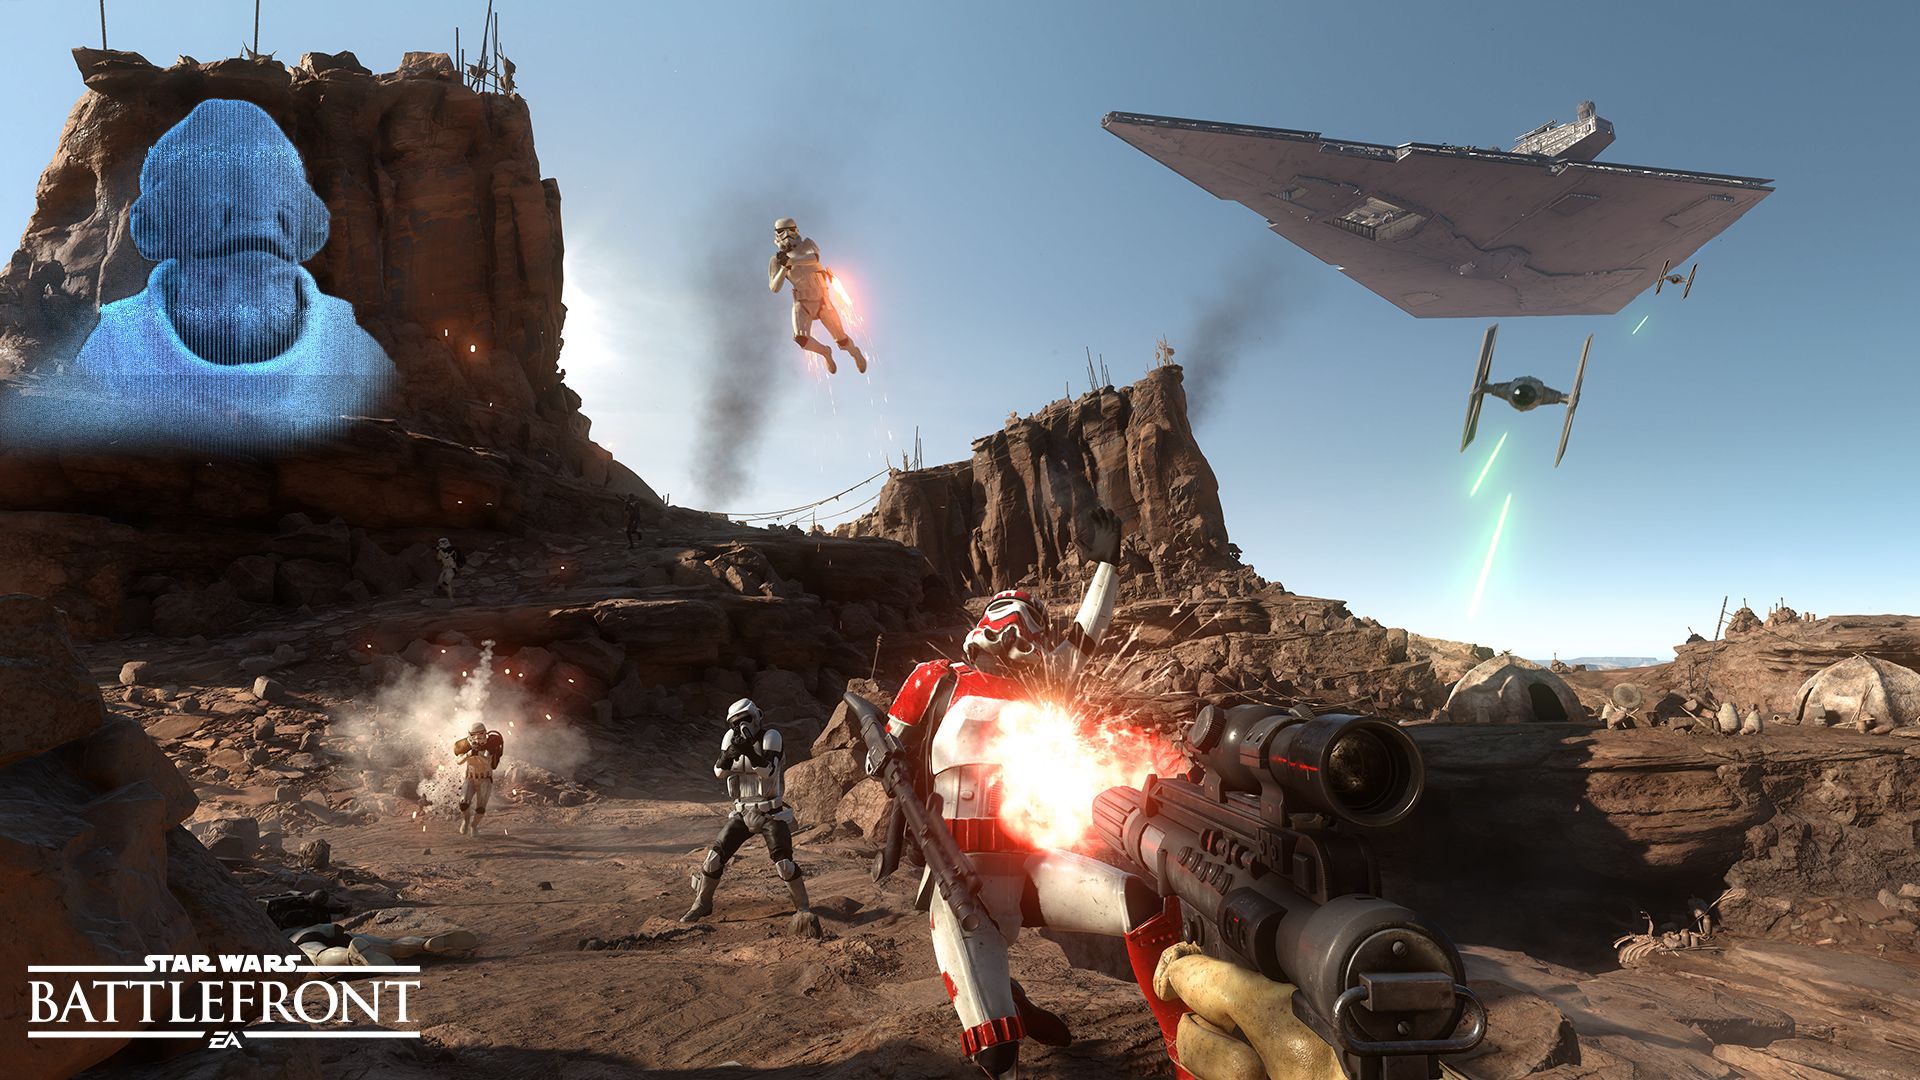 star wars battlefront review image 10